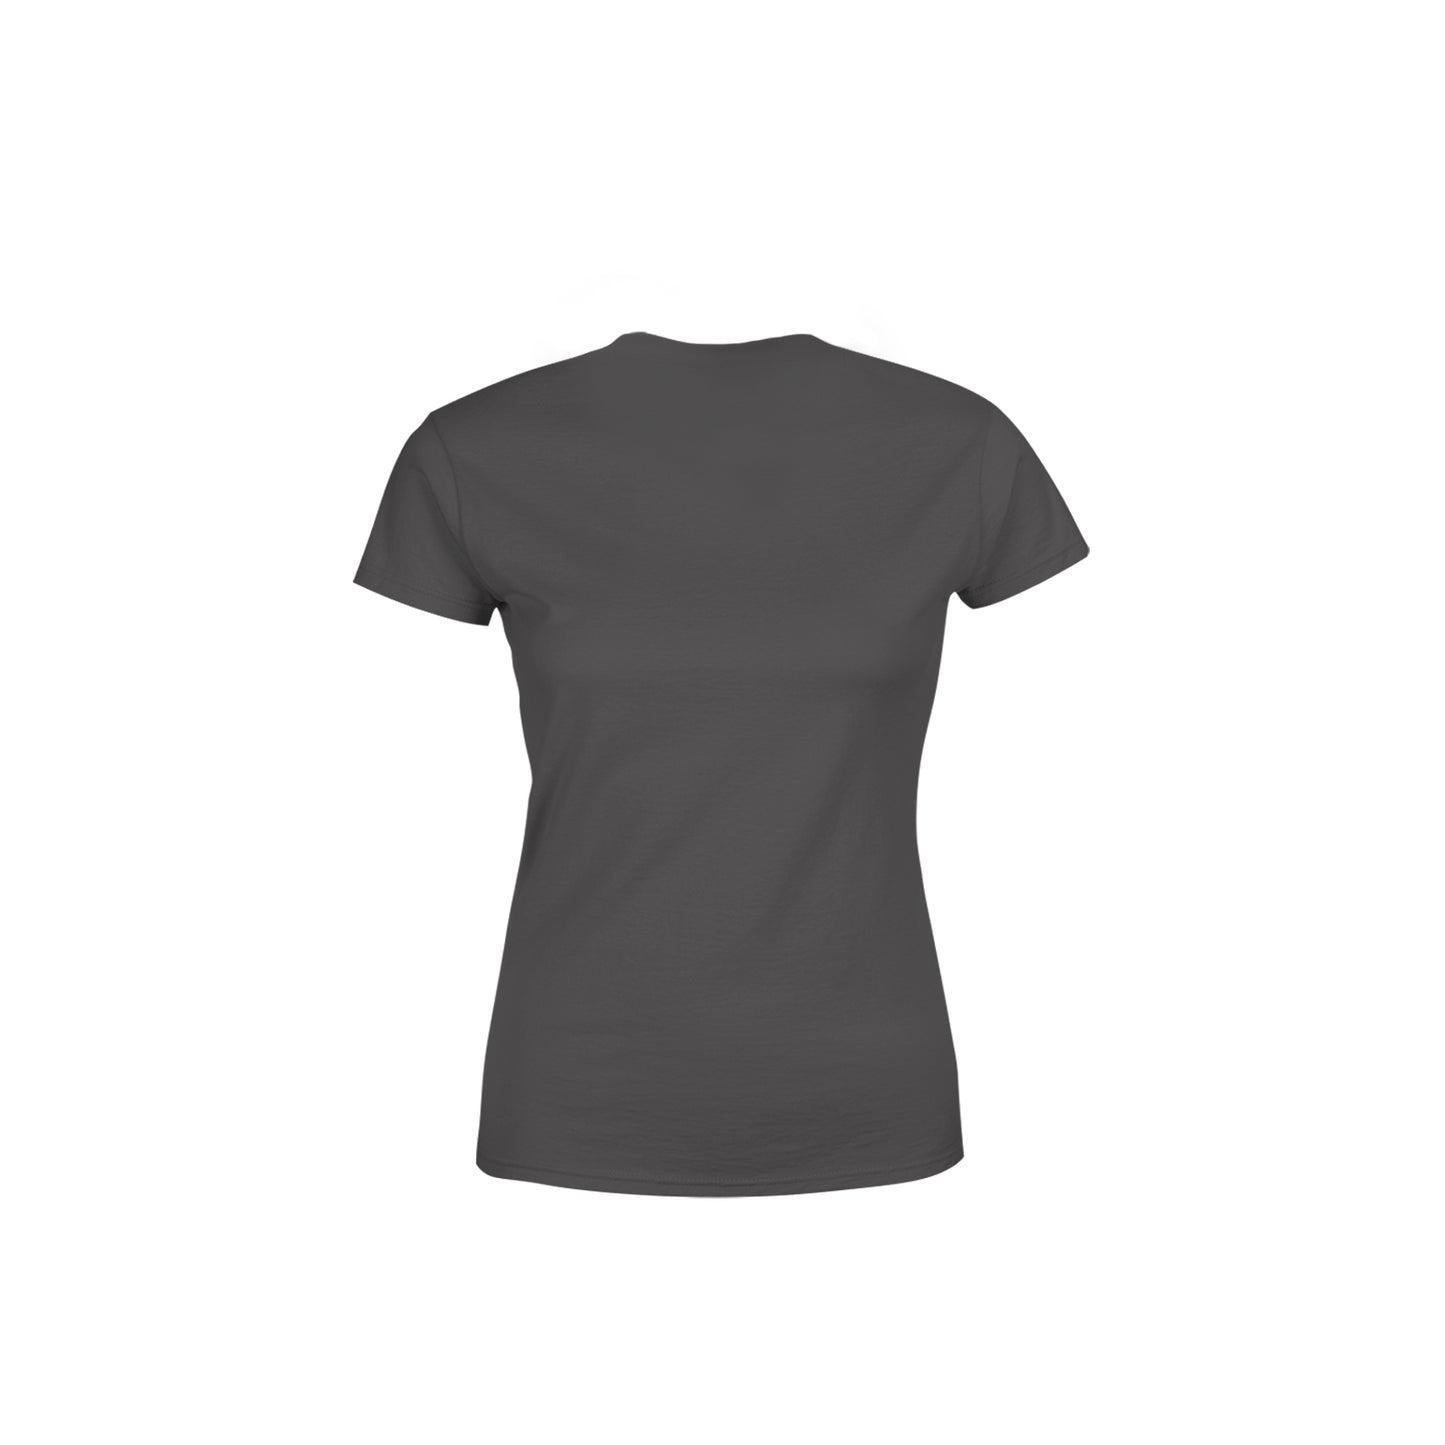 39 Number Women's T-Shirt (Charcoal Grey)